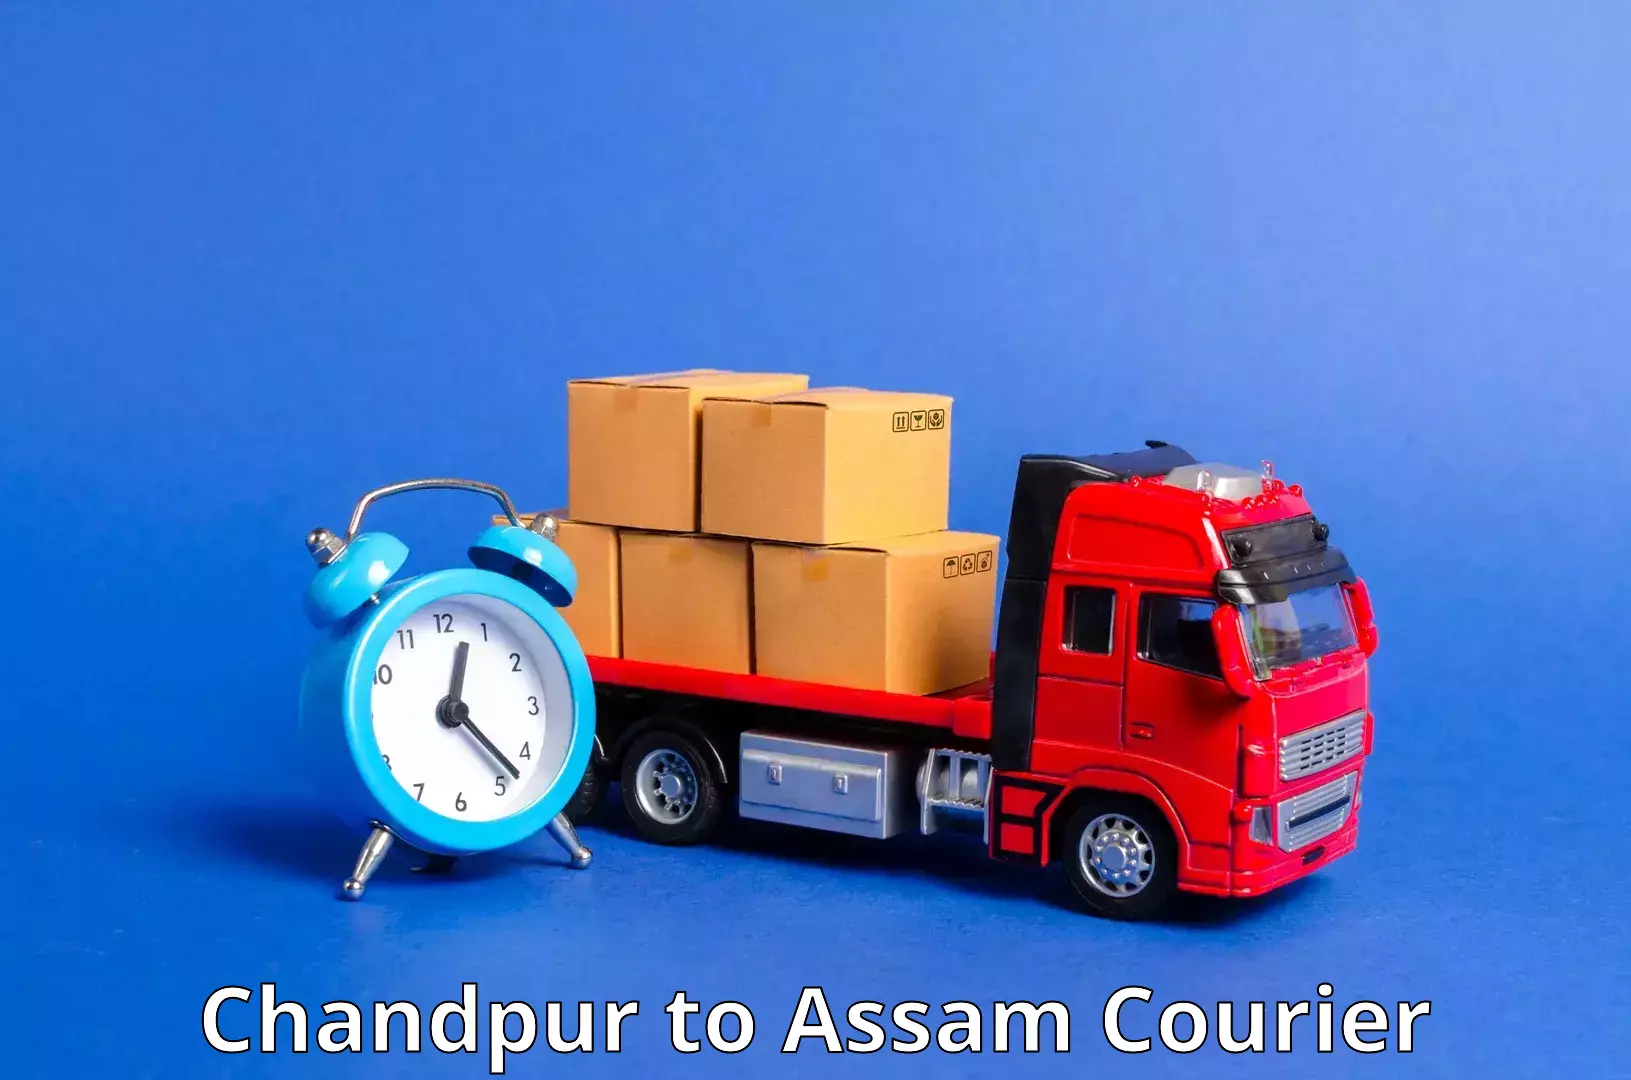 Express delivery capabilities Chandpur to Chabua